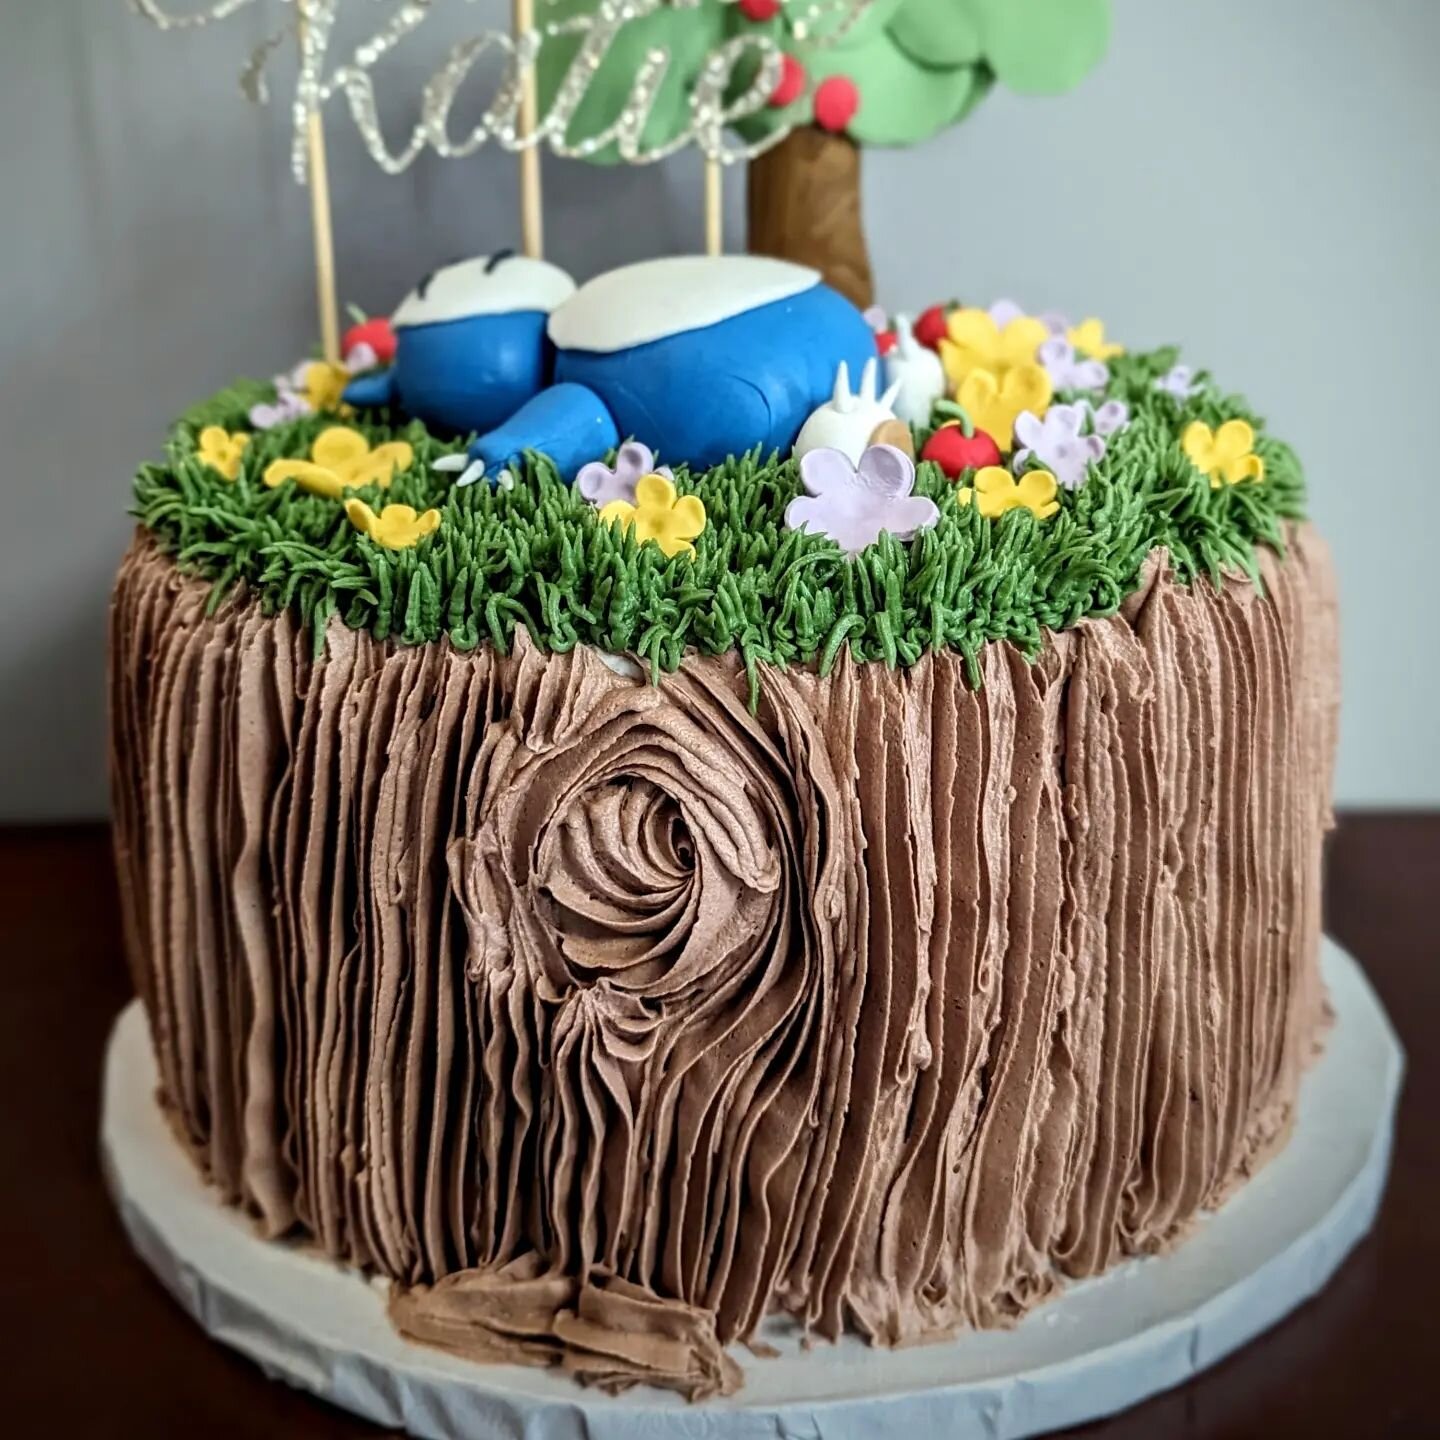 Pokemon Snorlax Cake

#pokemon #snorlax #pokemoncake #snorlaxcake #cakedecorating #cake #birthdaycake